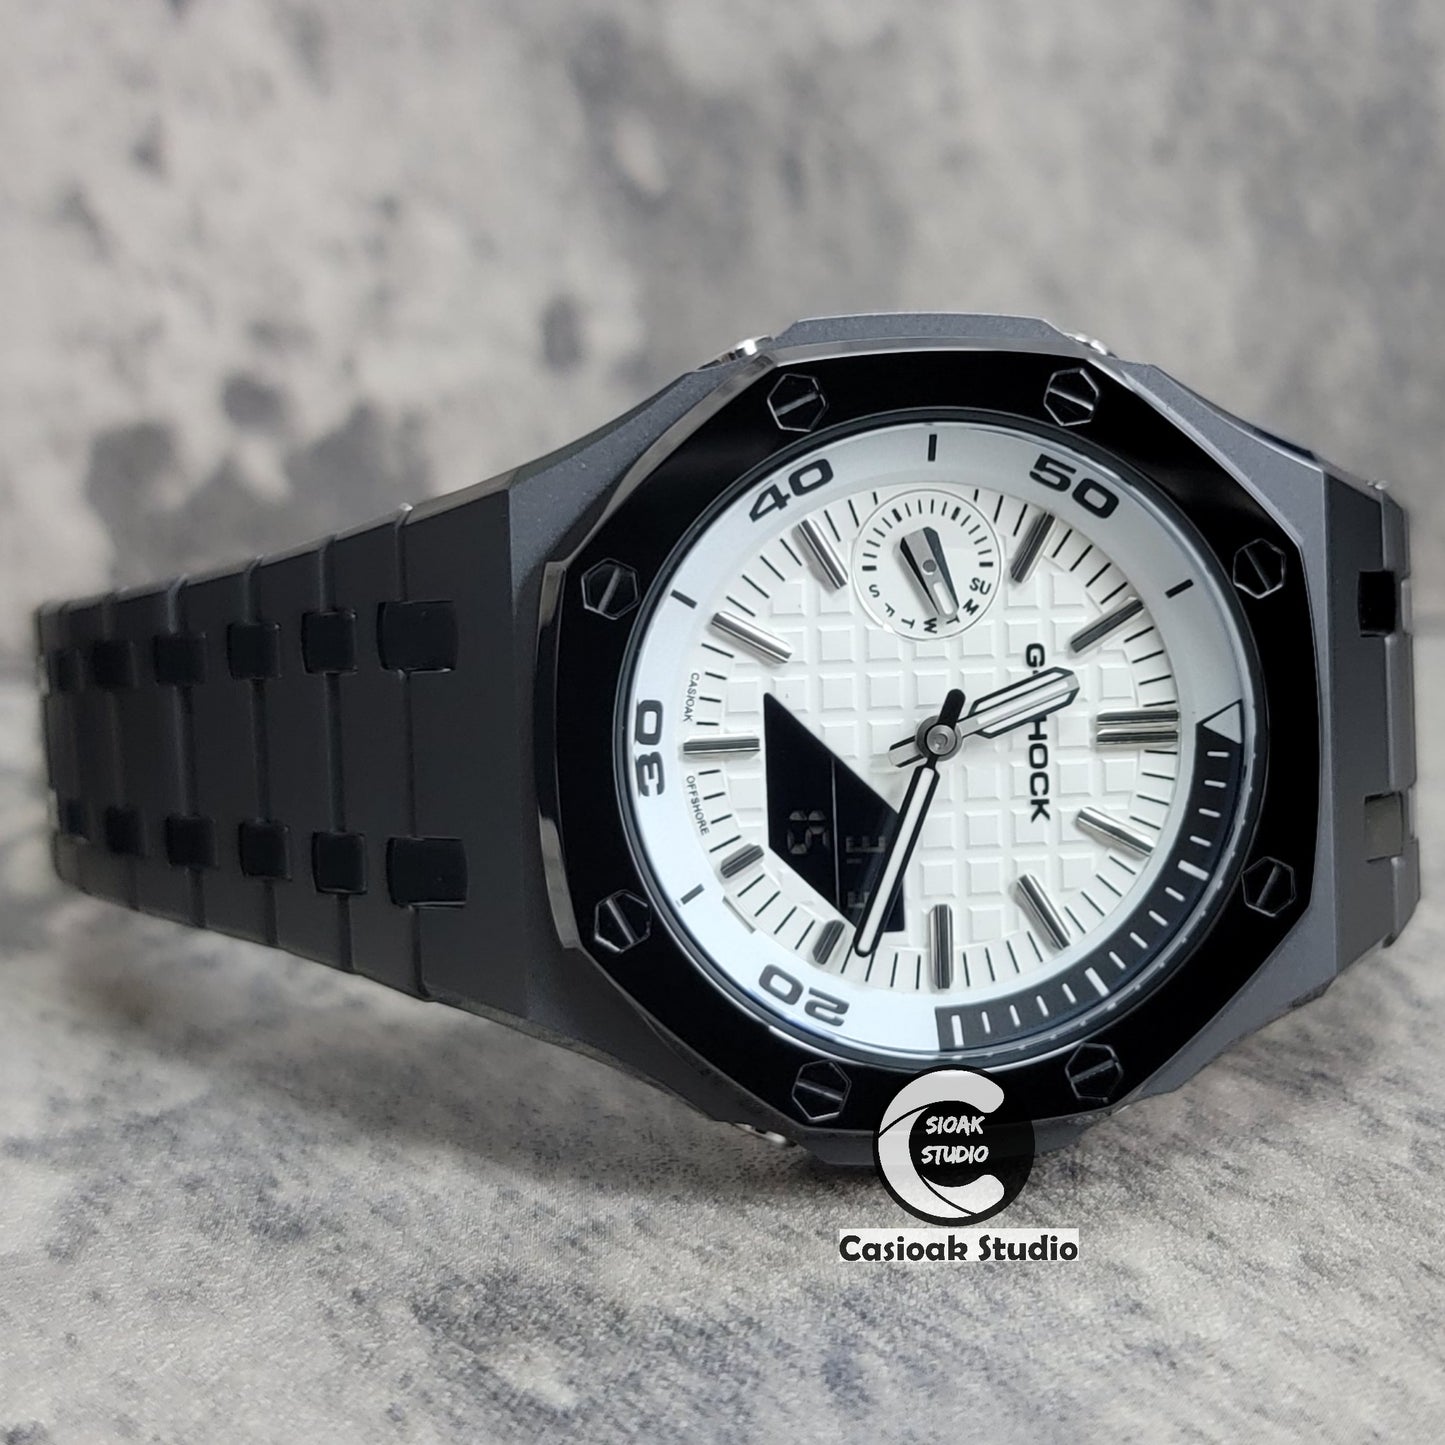 Casioak Mod Watch New Polished Gray Case Metal Strap Silver Time Mark White Dial 44mm Sapphire Glass - Casioak Studio